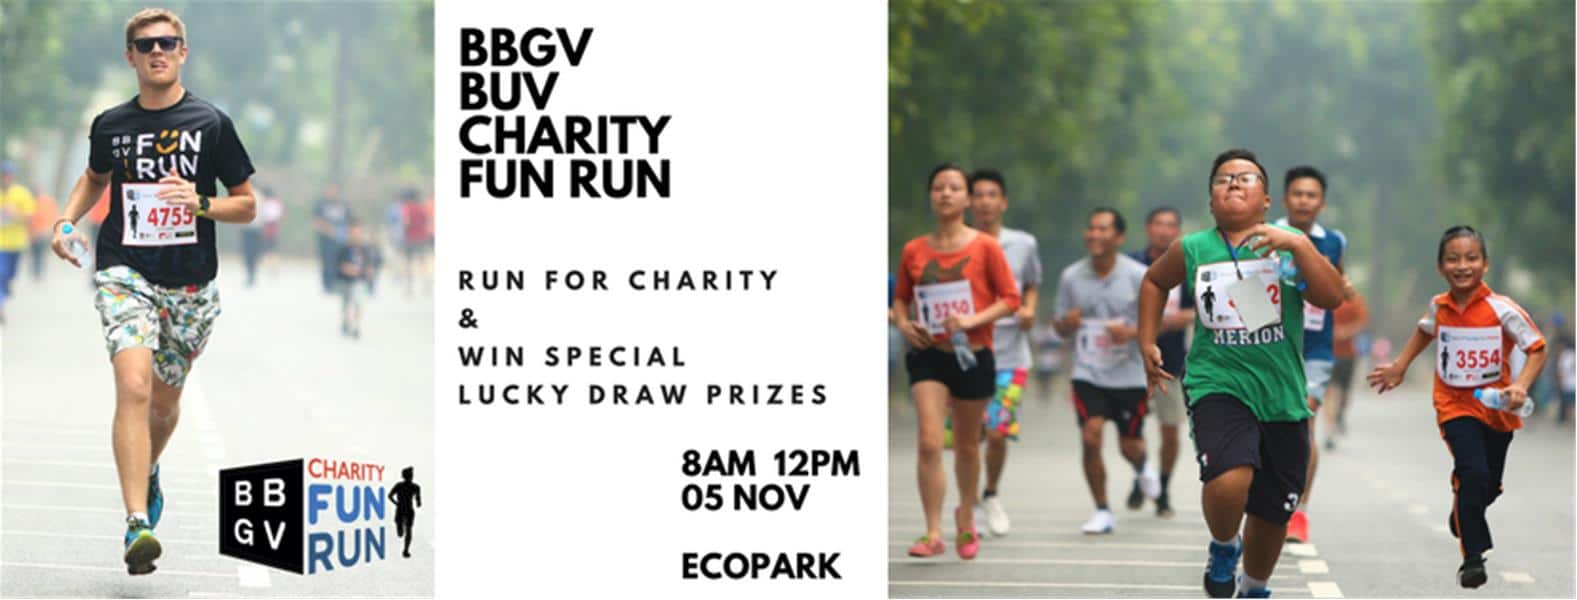 BBGV Hanoi Fun Run for Charity - bbgv hanoi charity fun run